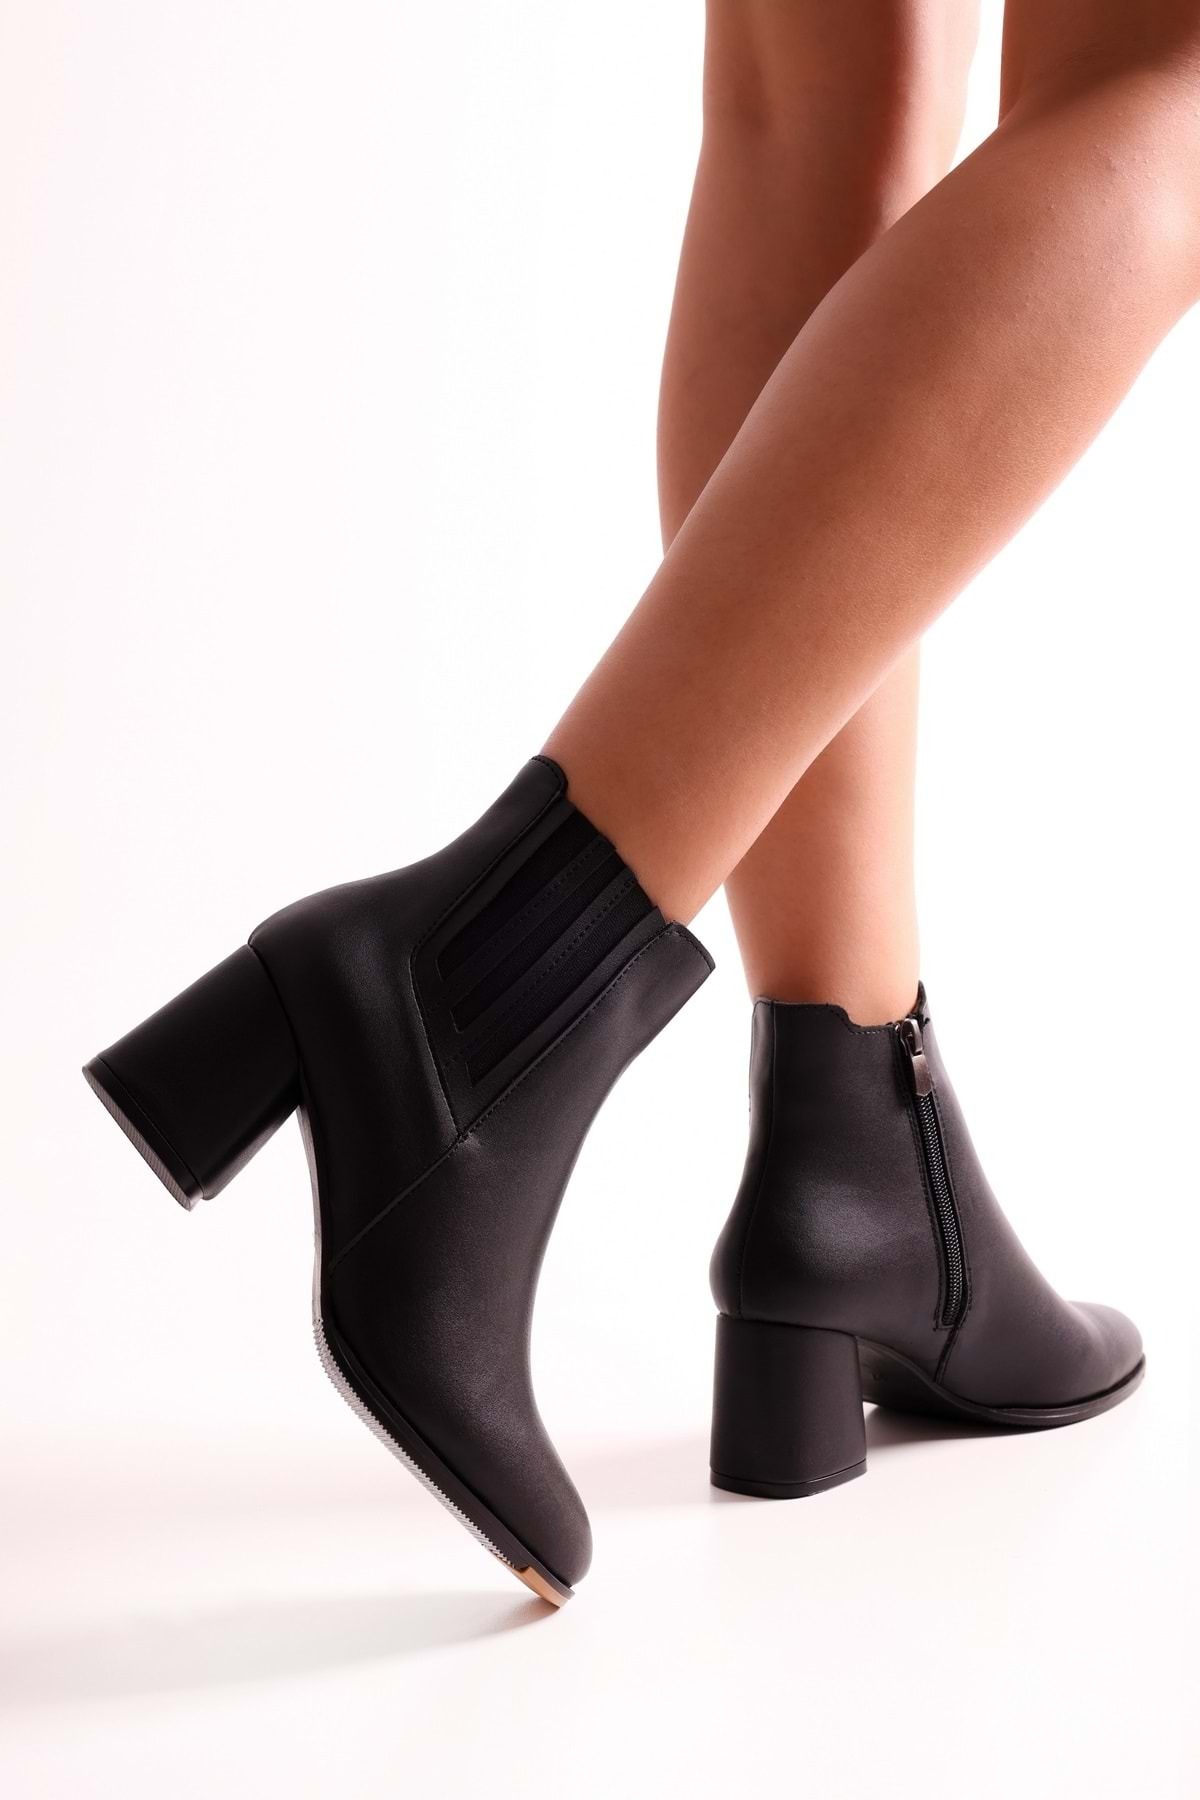 Shoeberry Women's Misty Black Skin Heeled Boots, Black Skin.